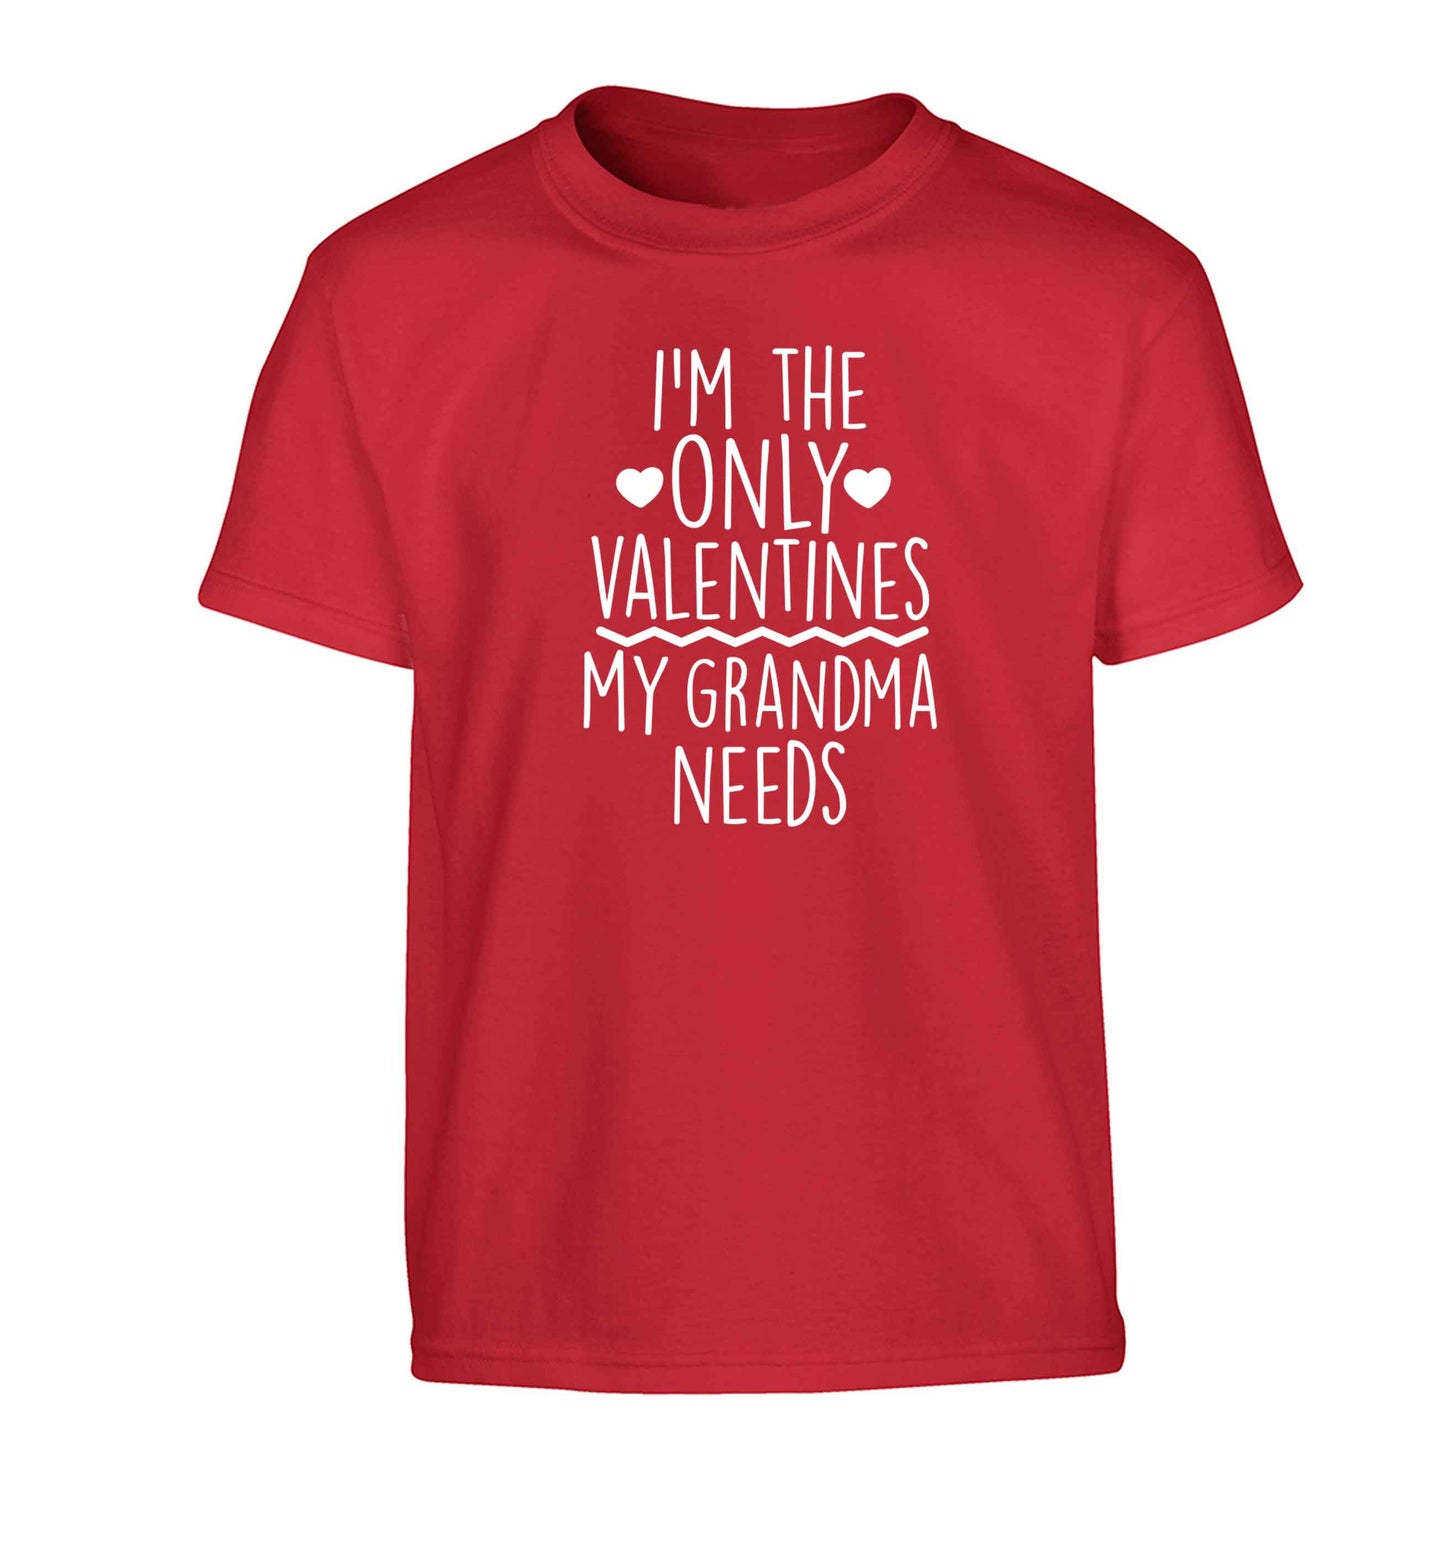 I'm the only valentines my grandma needs Children's red Tshirt 12-13 Years